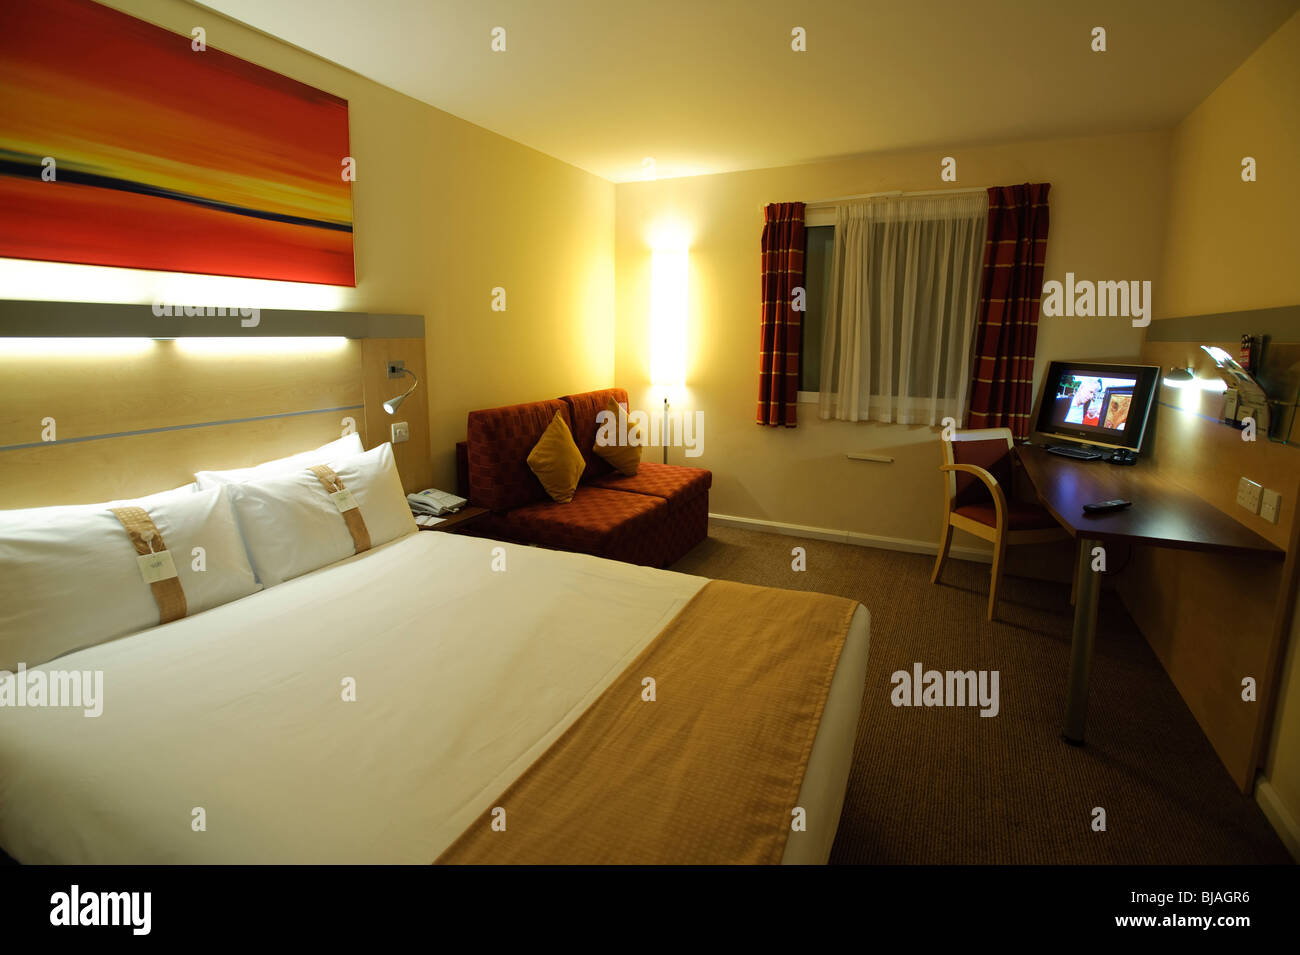 Holiday Inn express hotel bedroom, UK Stock Photo